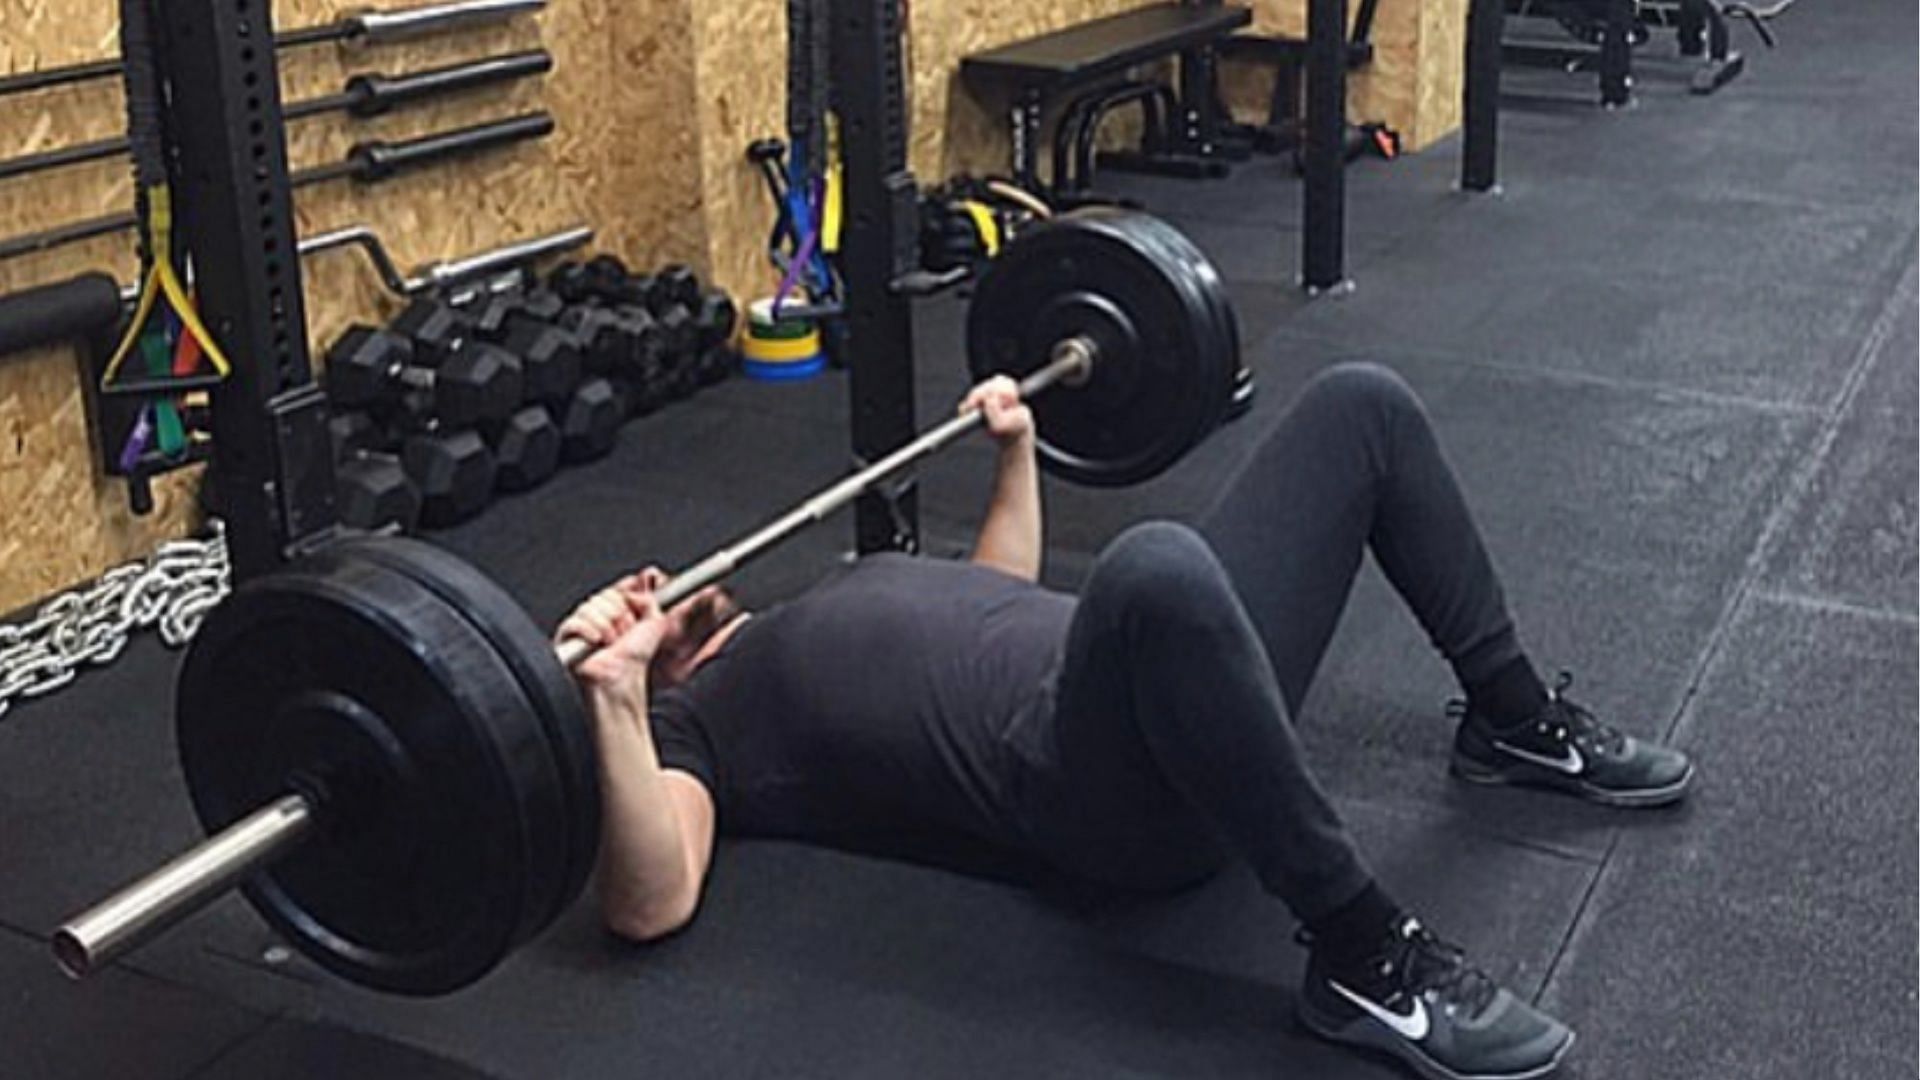 Floor press is an amazing exercise to develop upper-body strength. (Photo via Instagram/labforfitness)